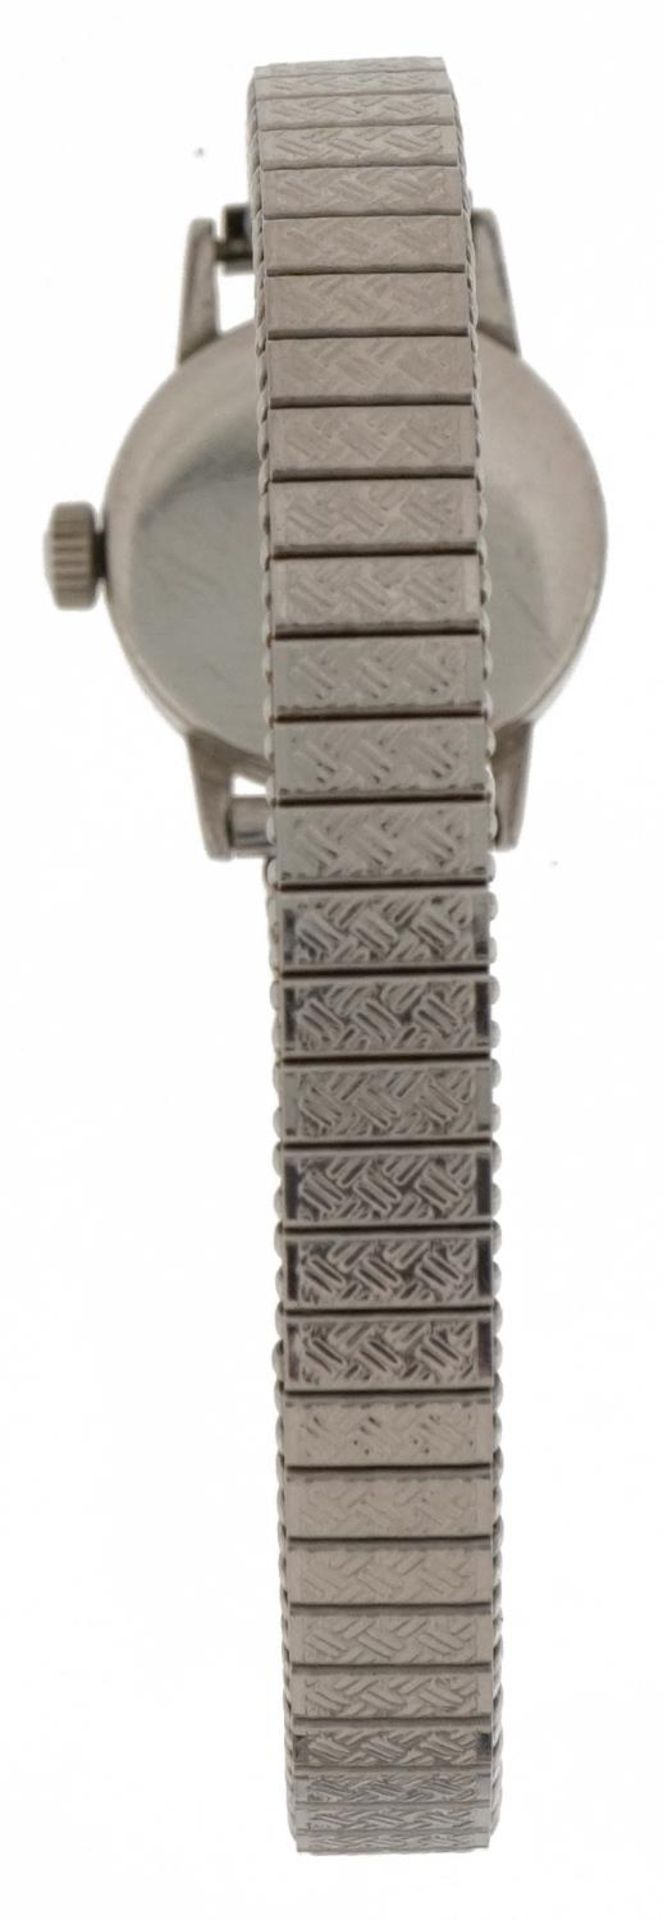 Omega, ladies wristwatch, the case numbered 511 016, 20mm in diameter - Bild 5 aus 6